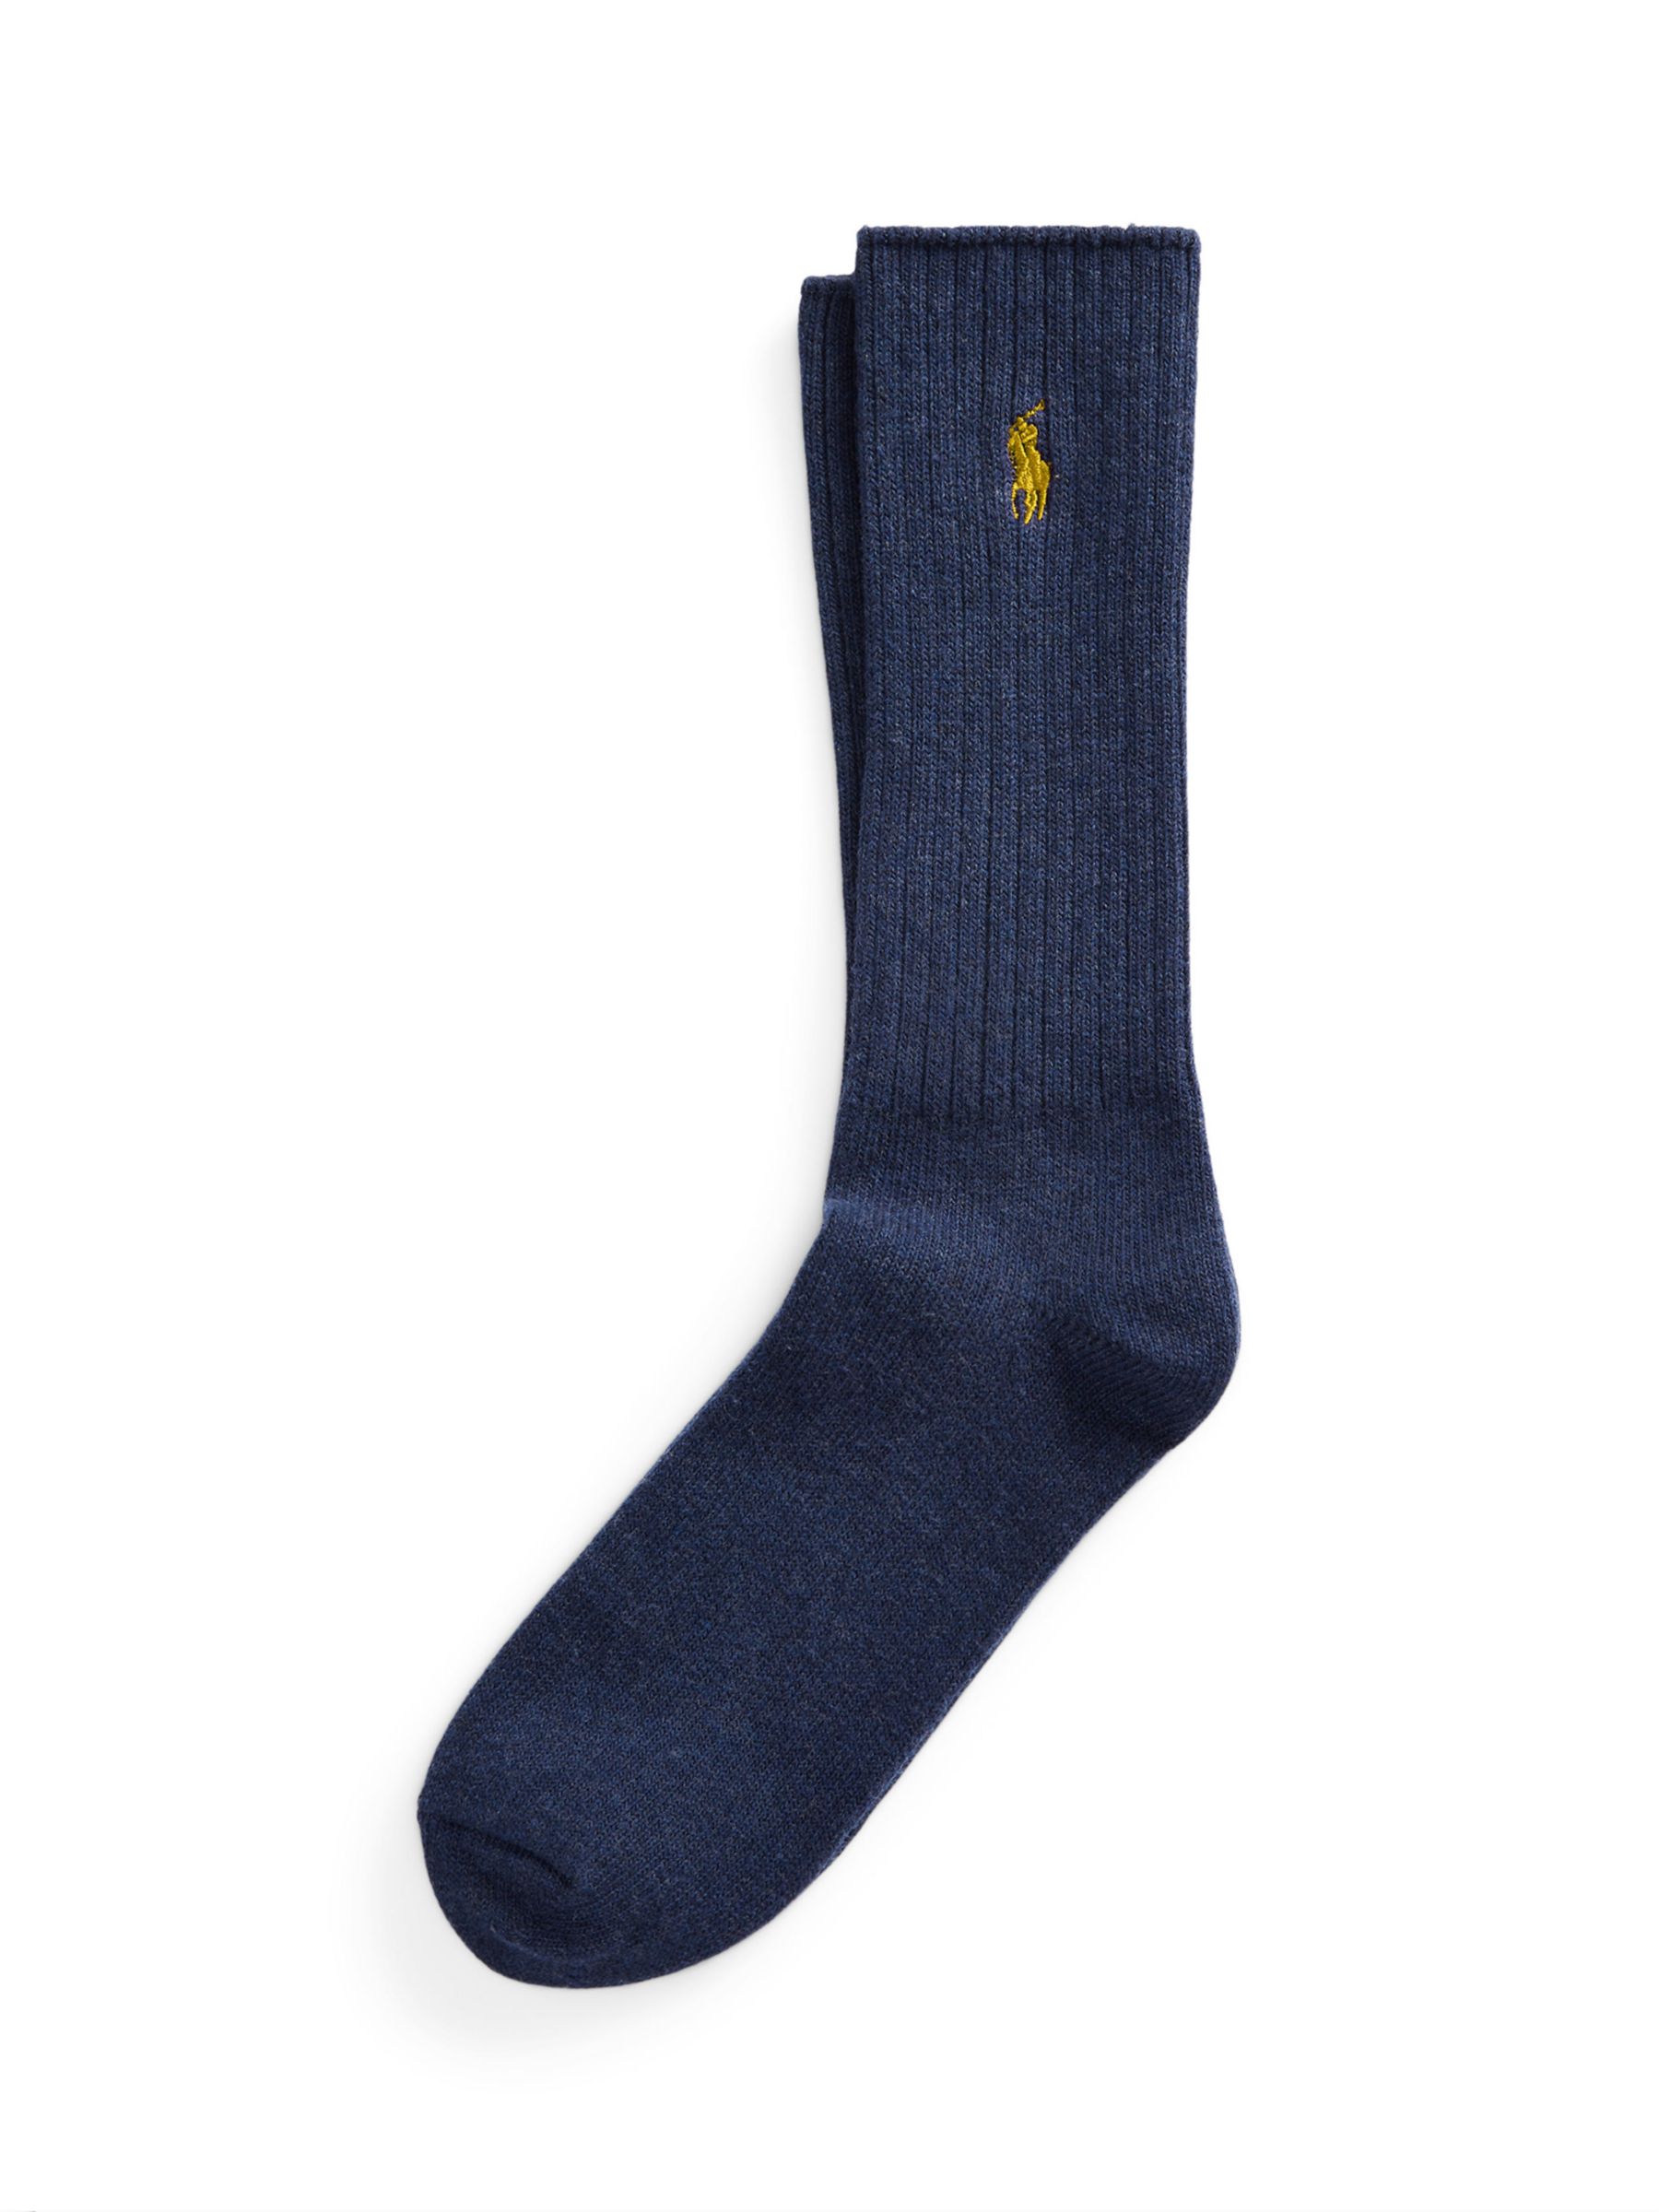 Buy Polo Ralph Lauren Crew Socks, One Size Online at johnlewis.com